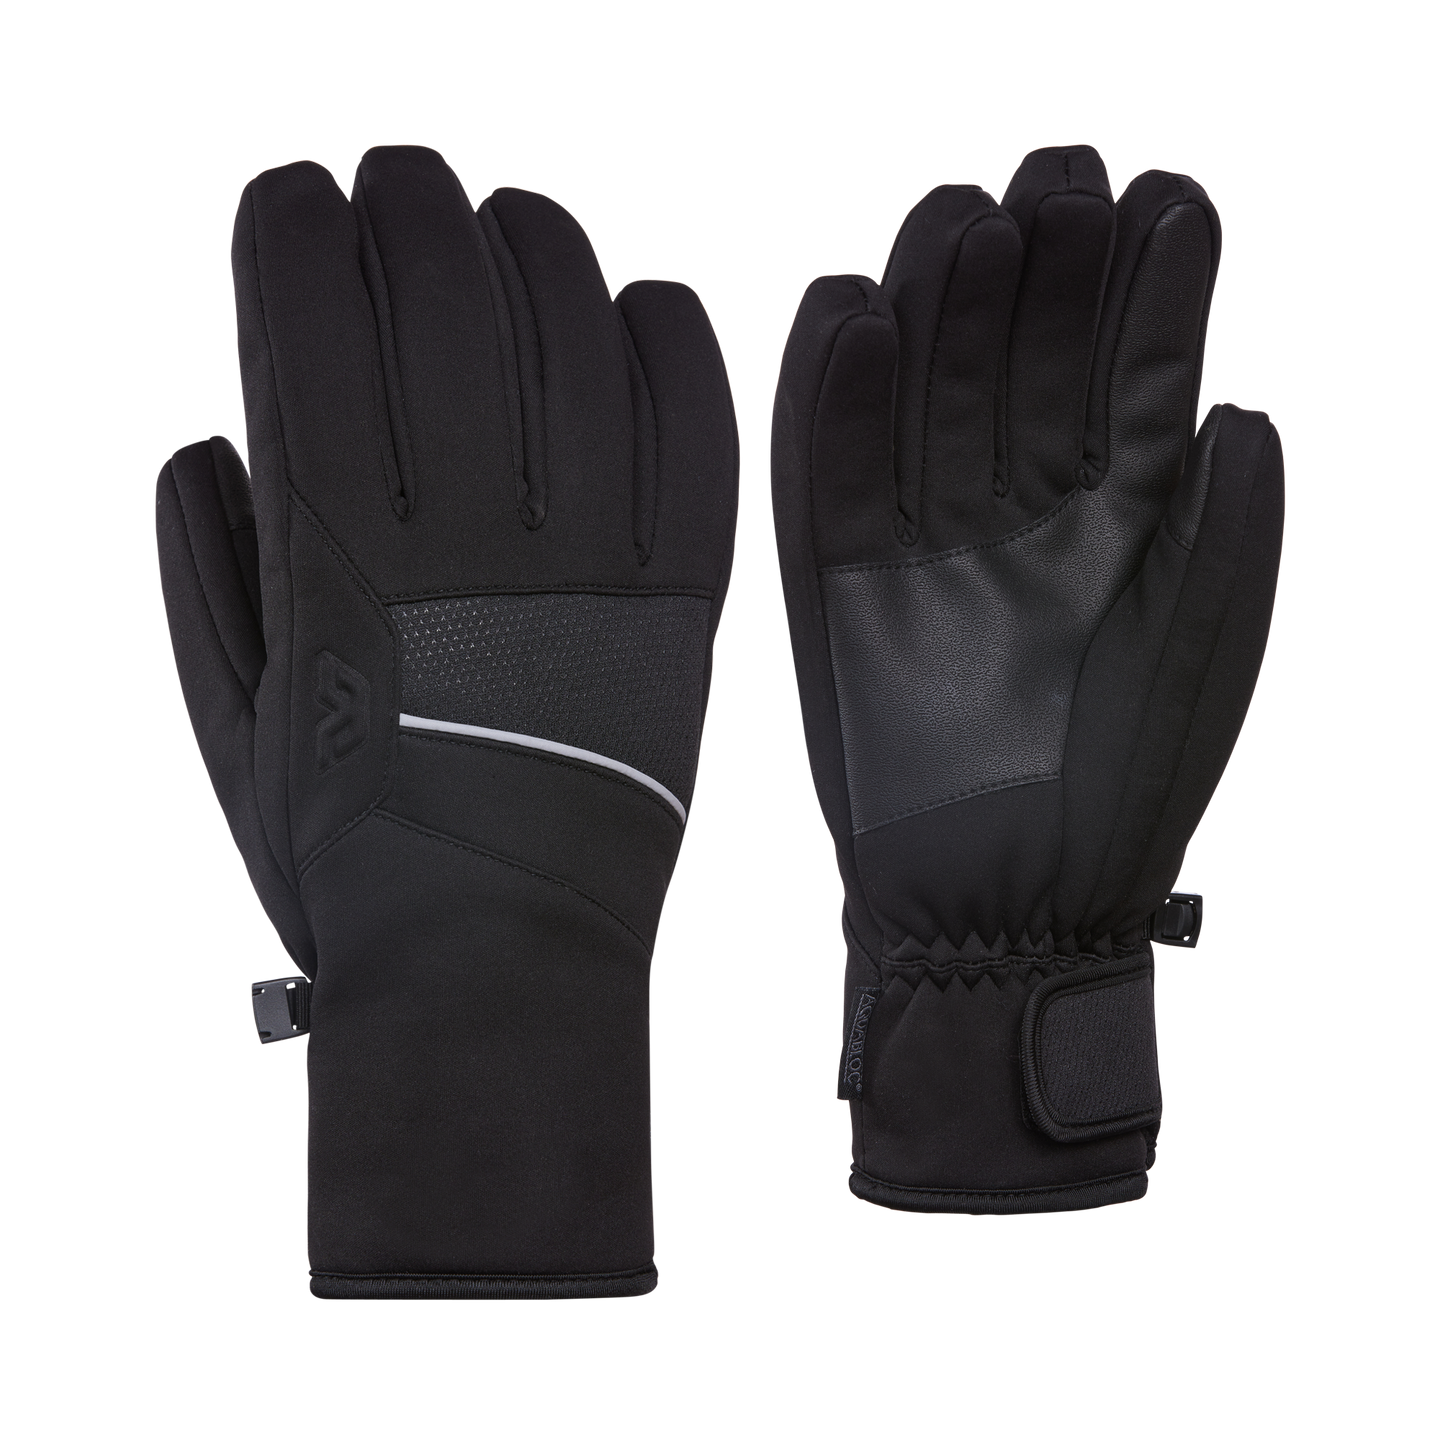 Compact Gloves - Men